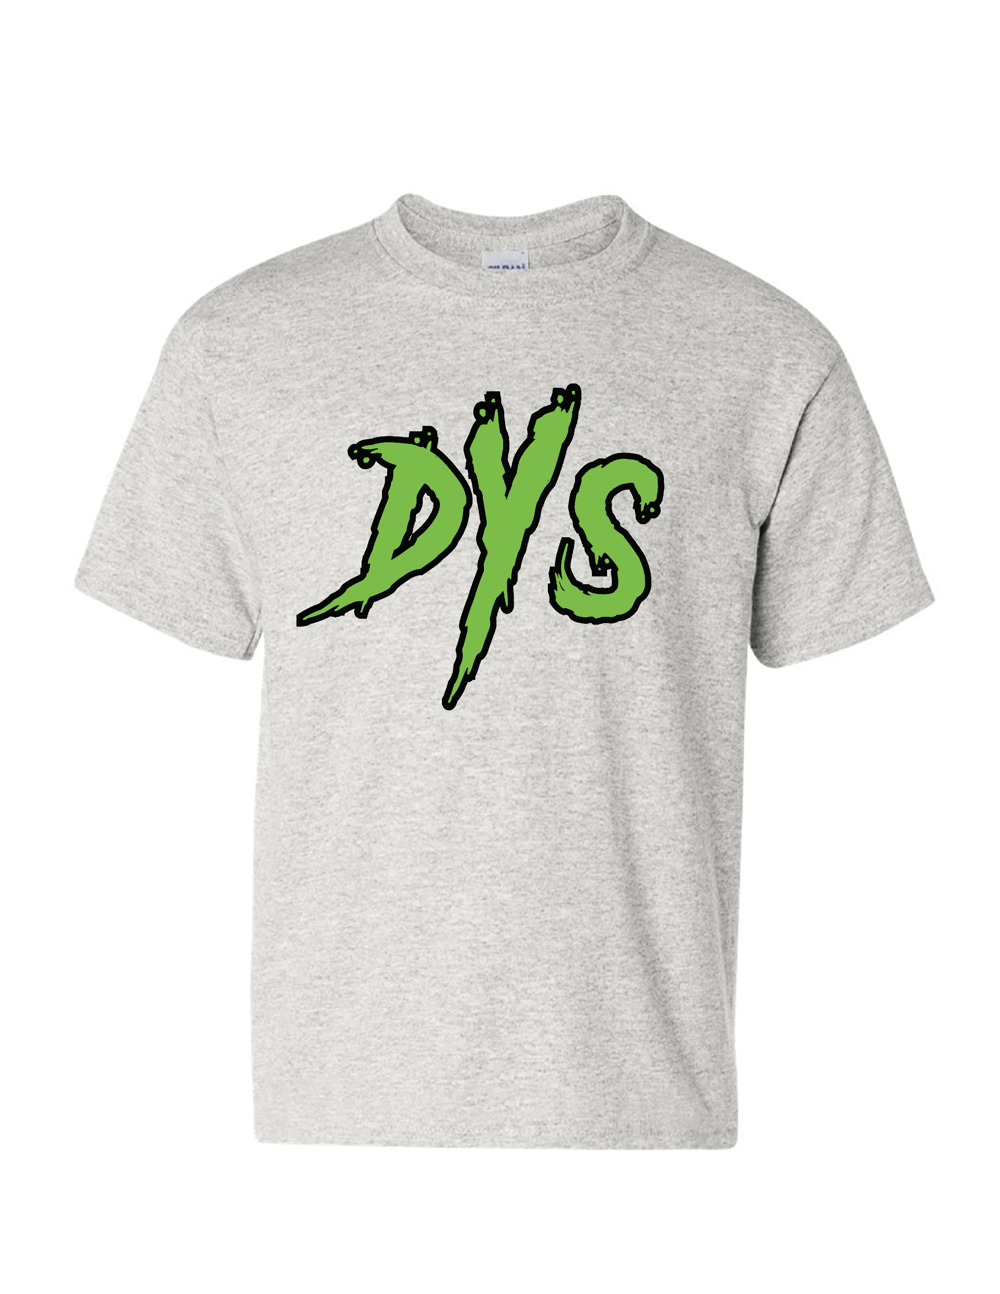 DysFunction "Dys" T-Shirt